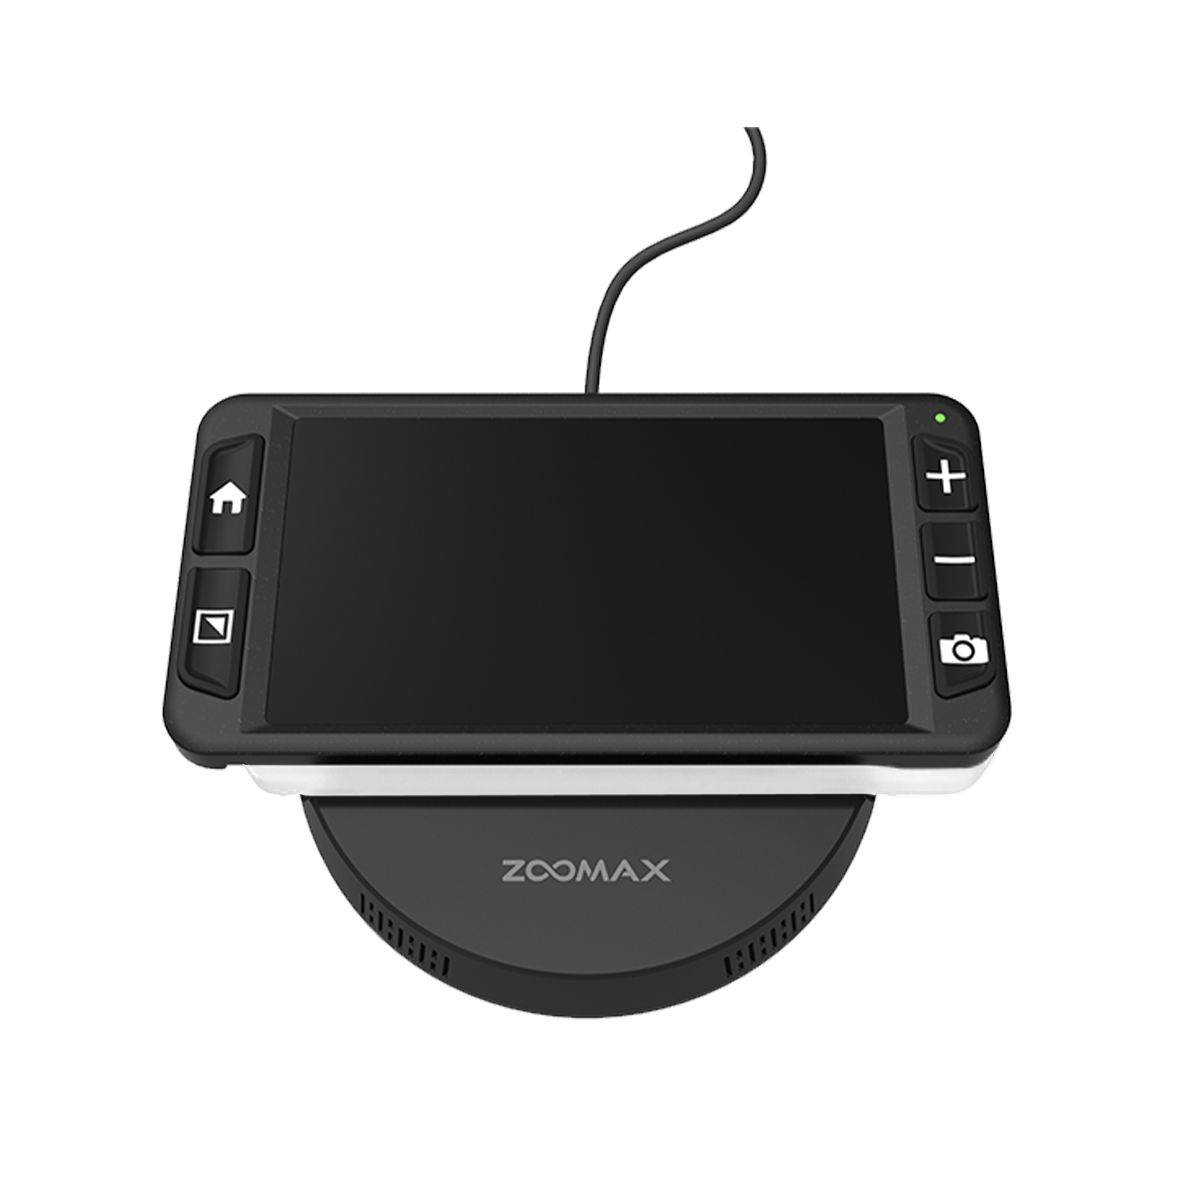 luna 6 handheld video magnifier product images zu2 min 1